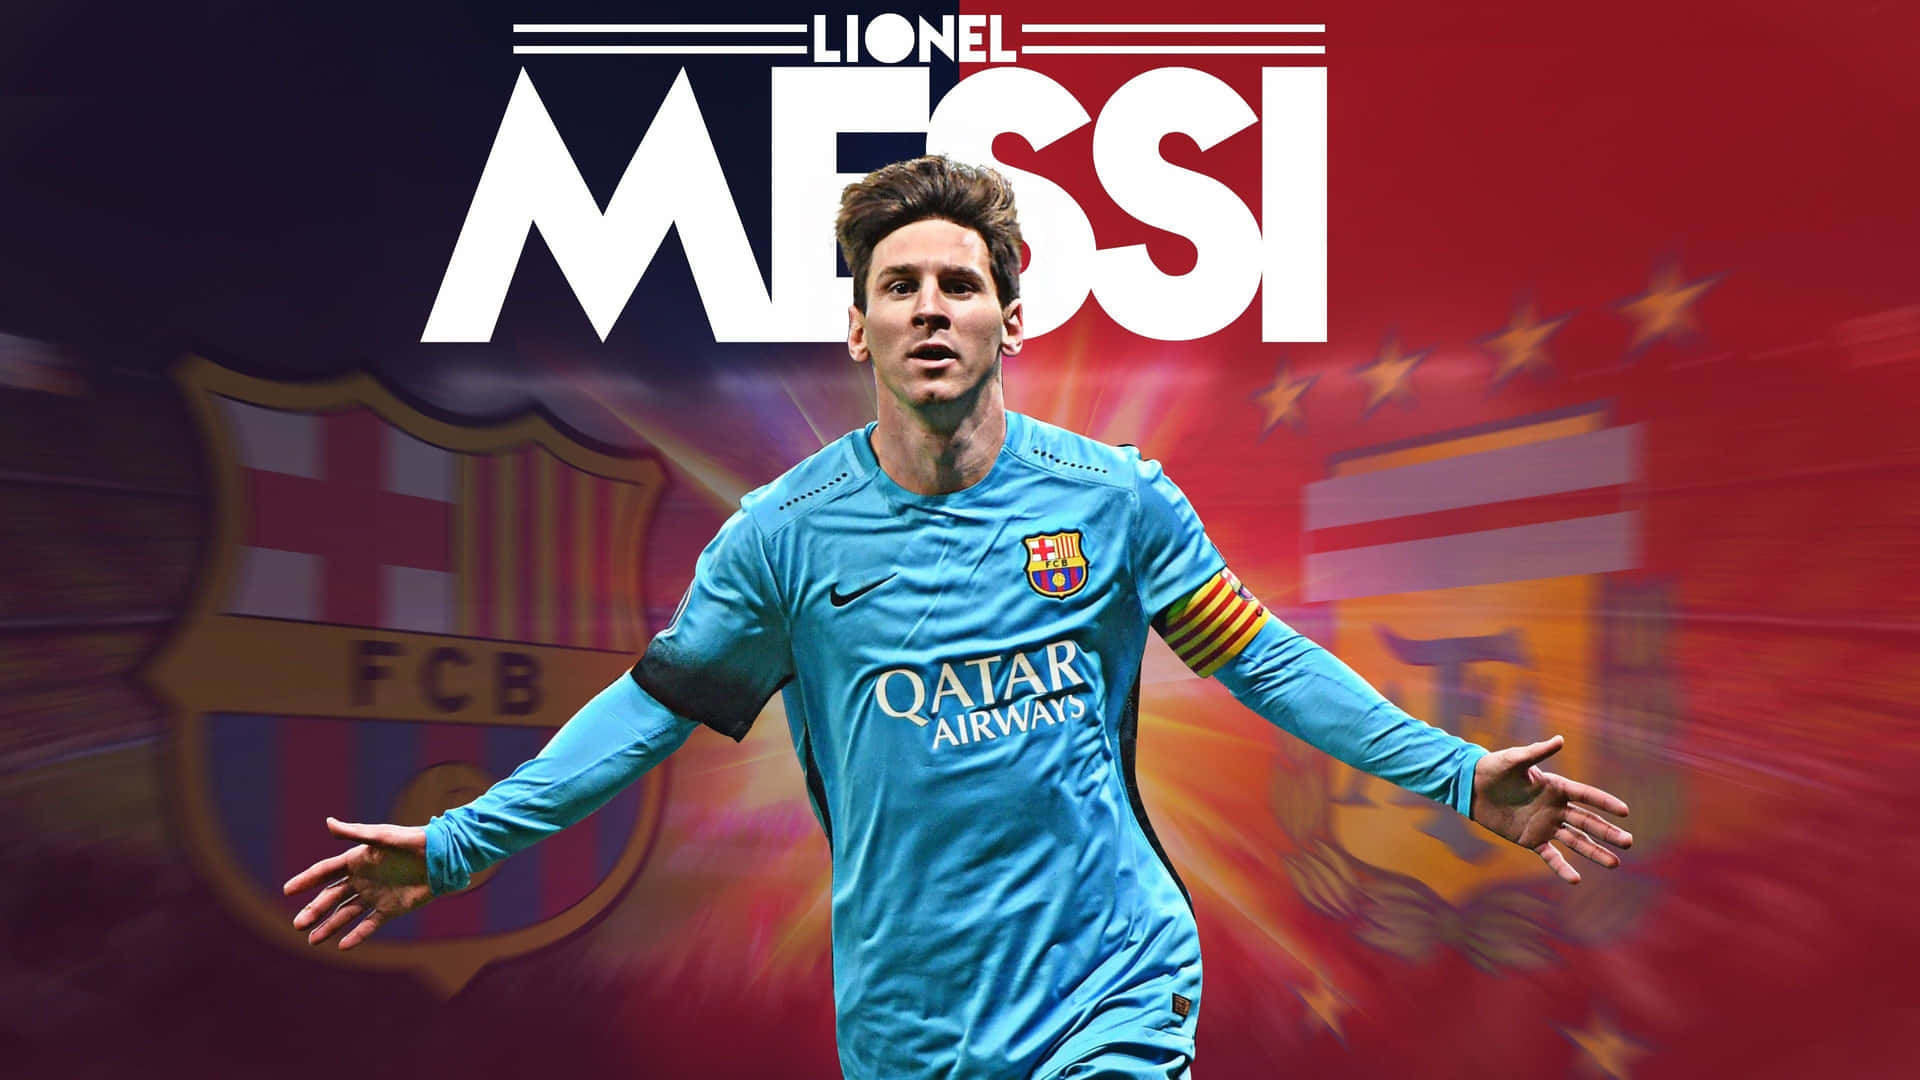 World-renowned soccer superstar and FC Barcelona legend Lionel Messi.